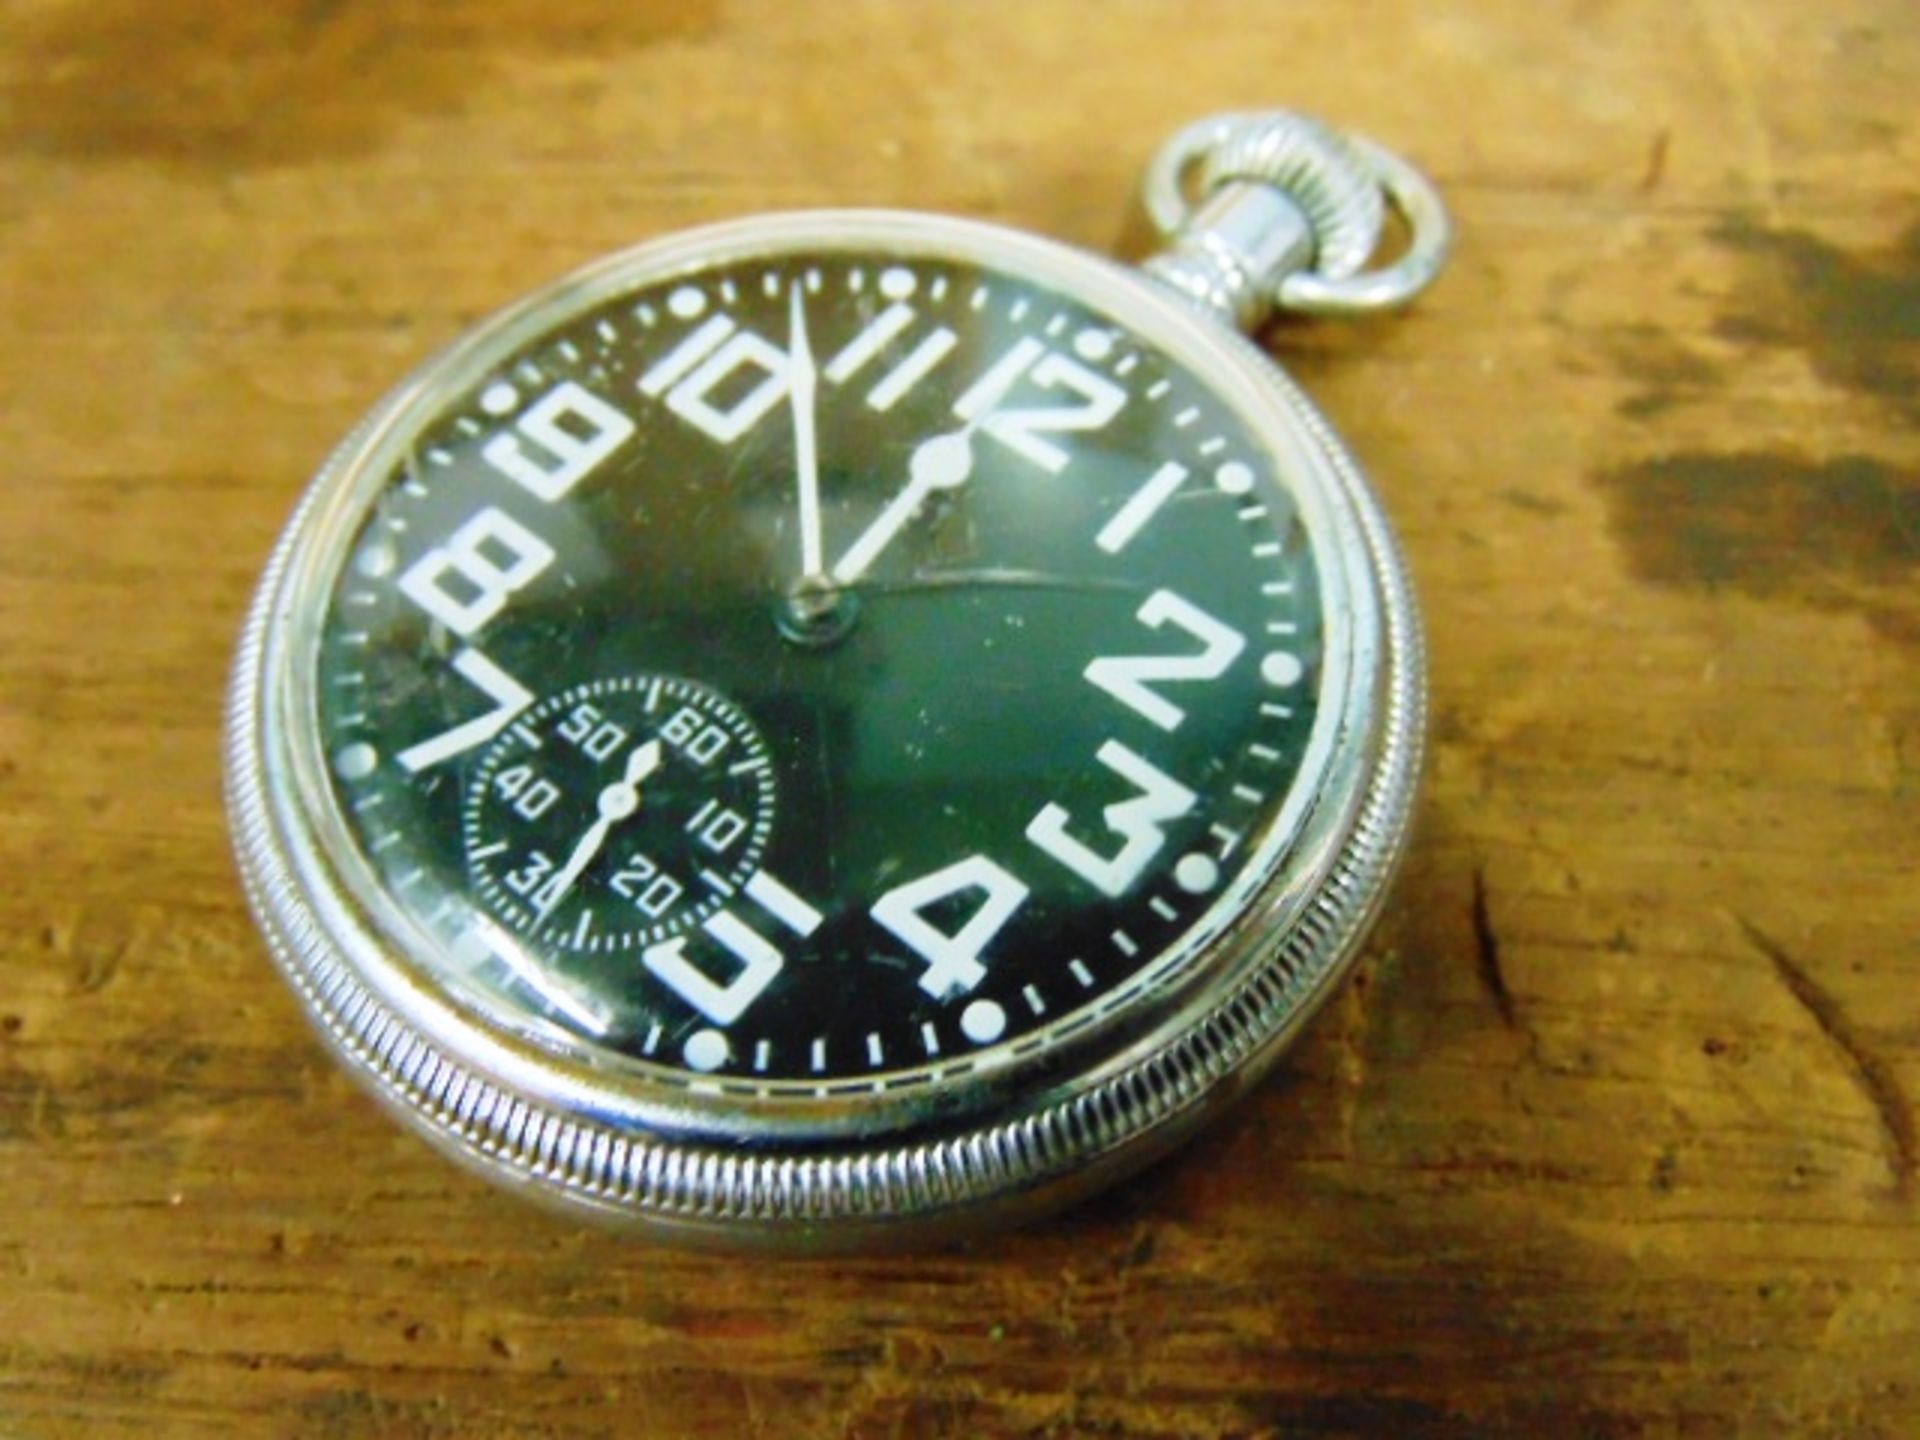 Waltham military pocket watch - Image 2 of 5